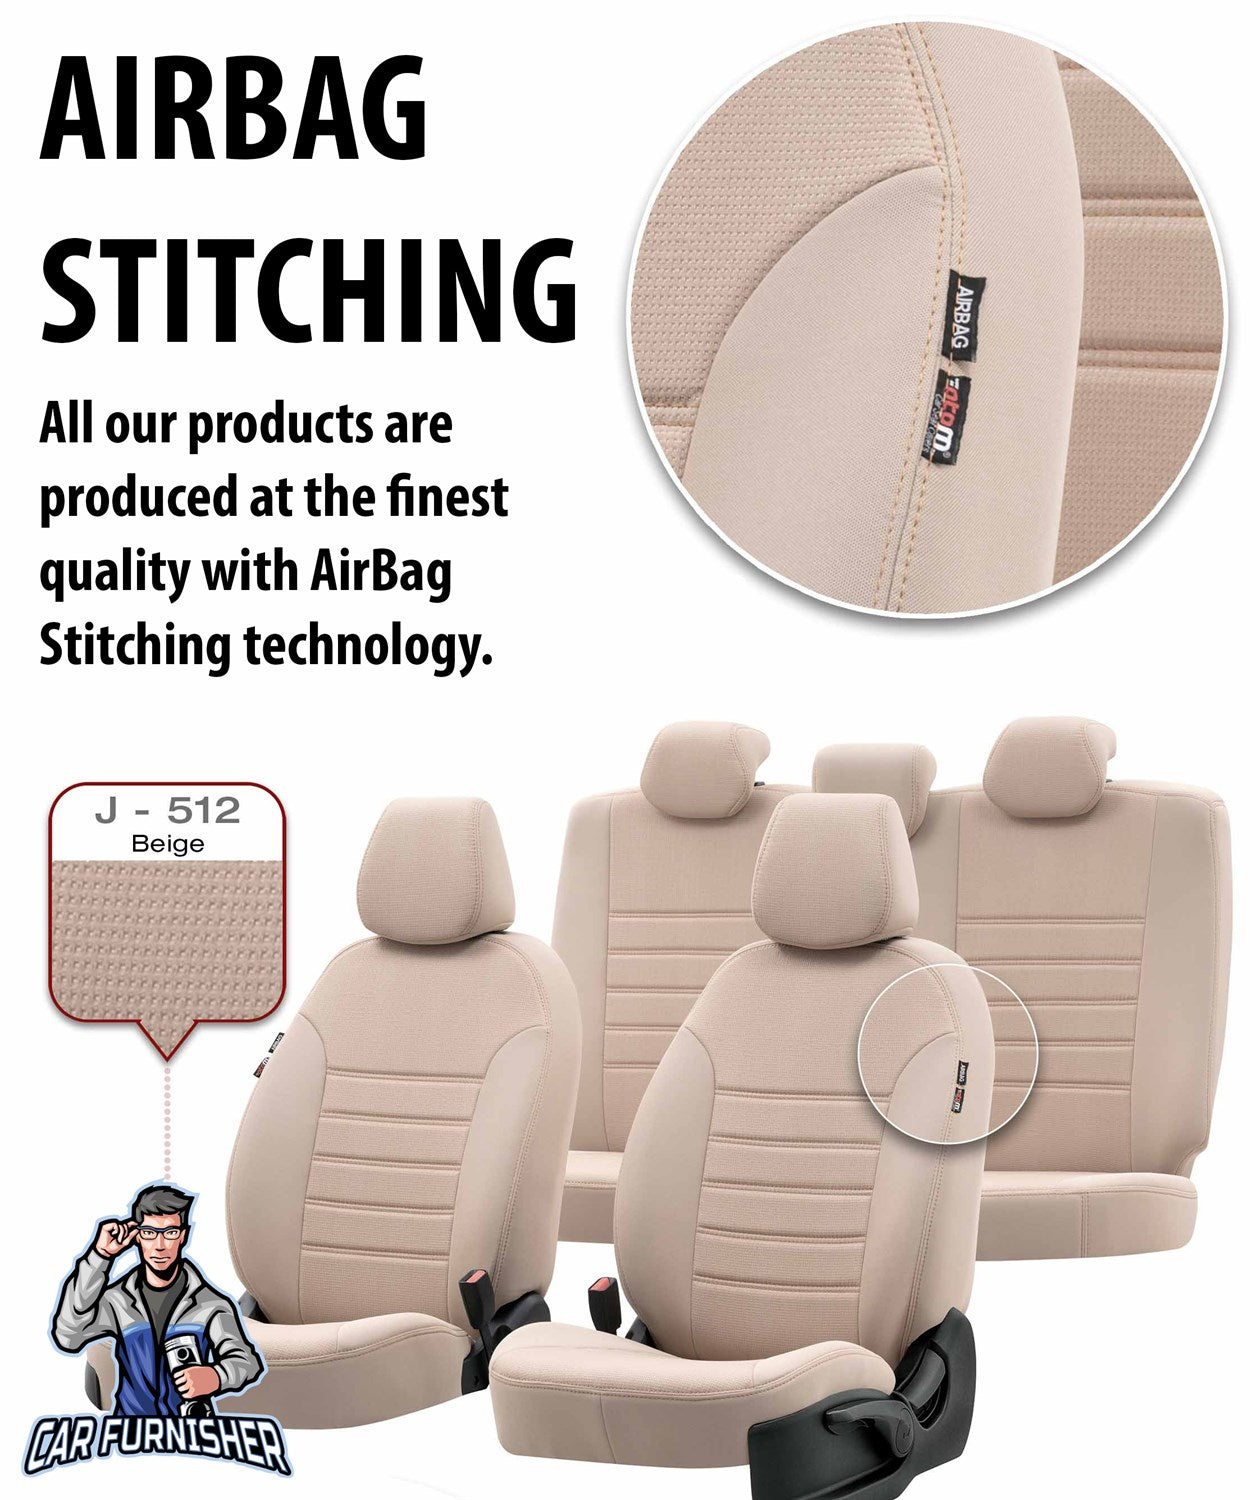 Iveco Stralis Seat Cover Original Jacquard Design Smoked Black Front Seats (2 Seats + Handrest + Headrests) Jacquard Fabric